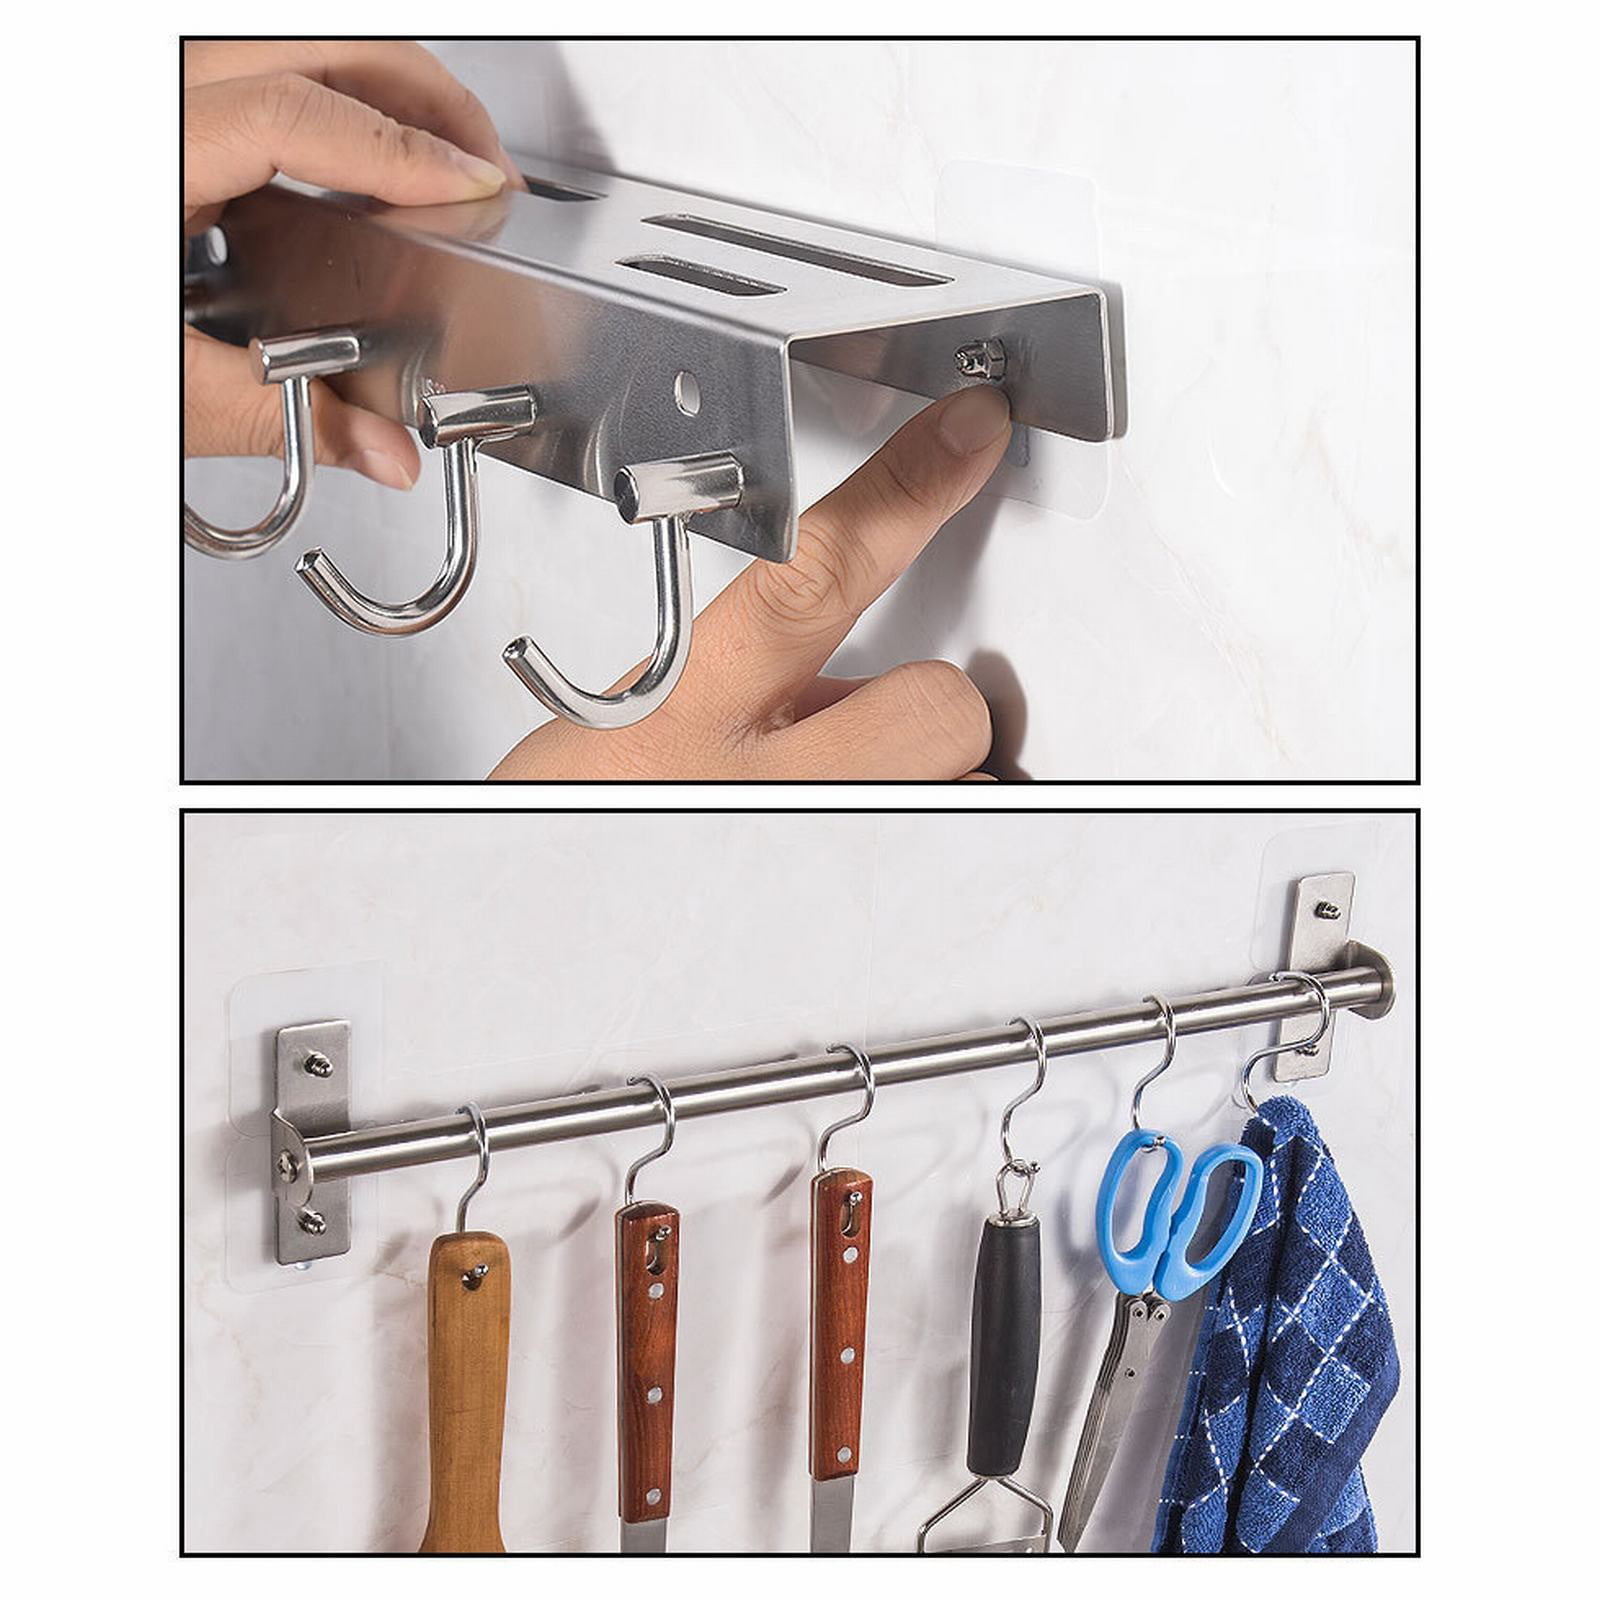 Iopqo Command Hook Large Wall Mount Strong Adhesive Waterproof Handheld Shower Holder Shower Head Holder for Shower Kids Shower Bathroom Shower Hooks